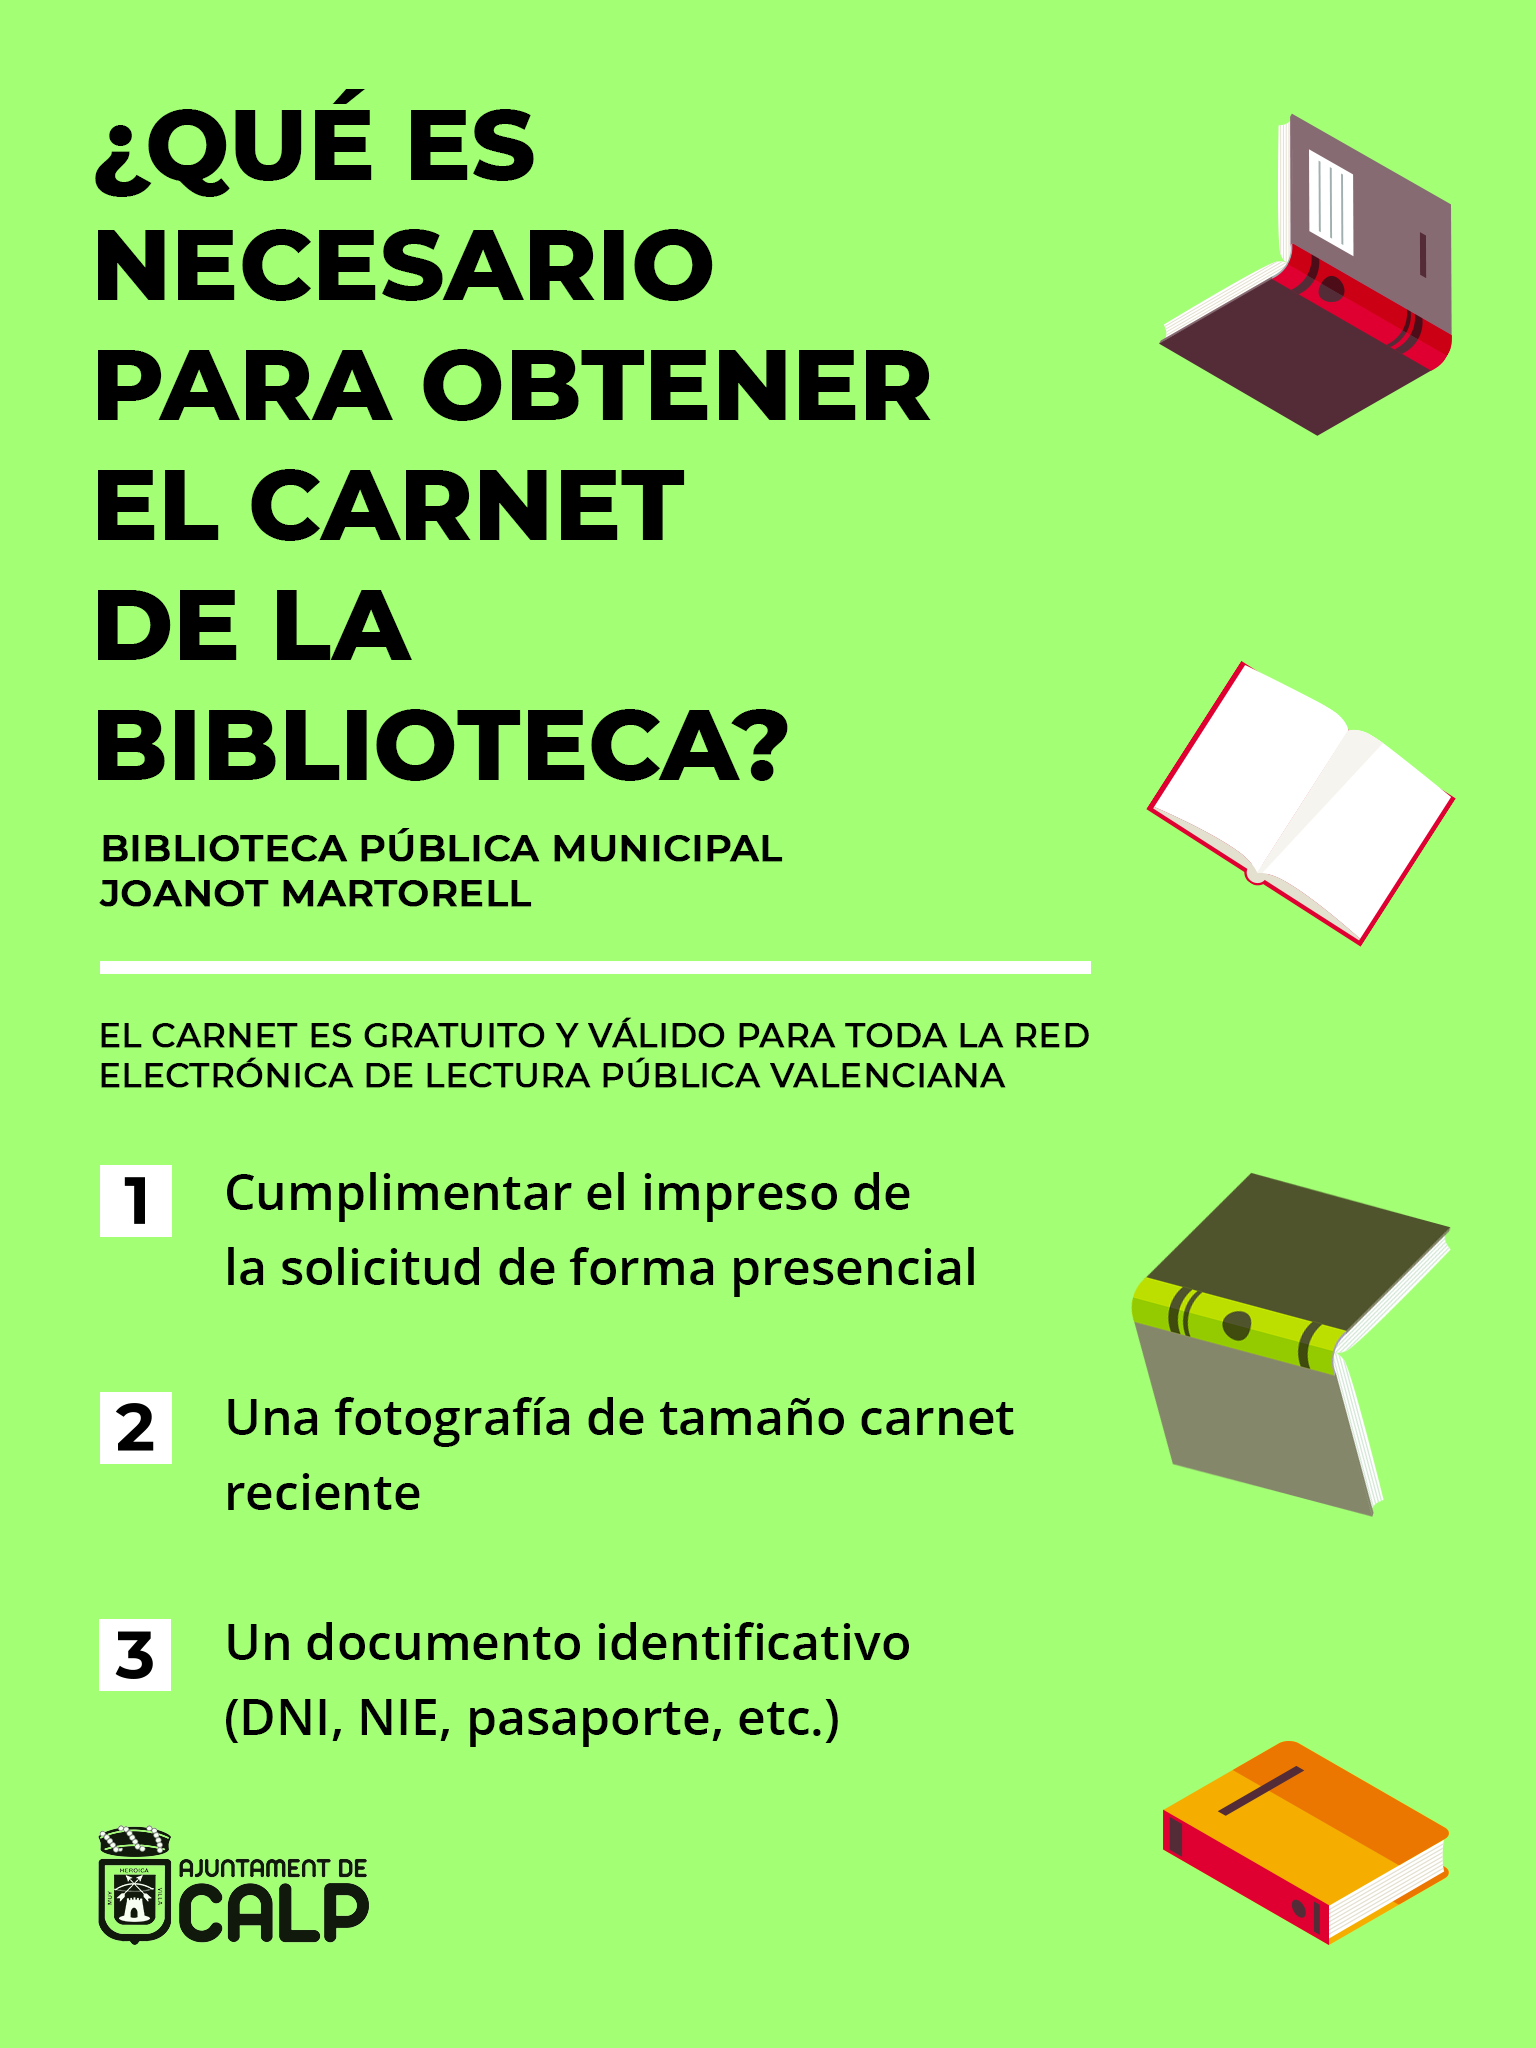 Biblioteca pública municipal Joanot Martorell, Calp